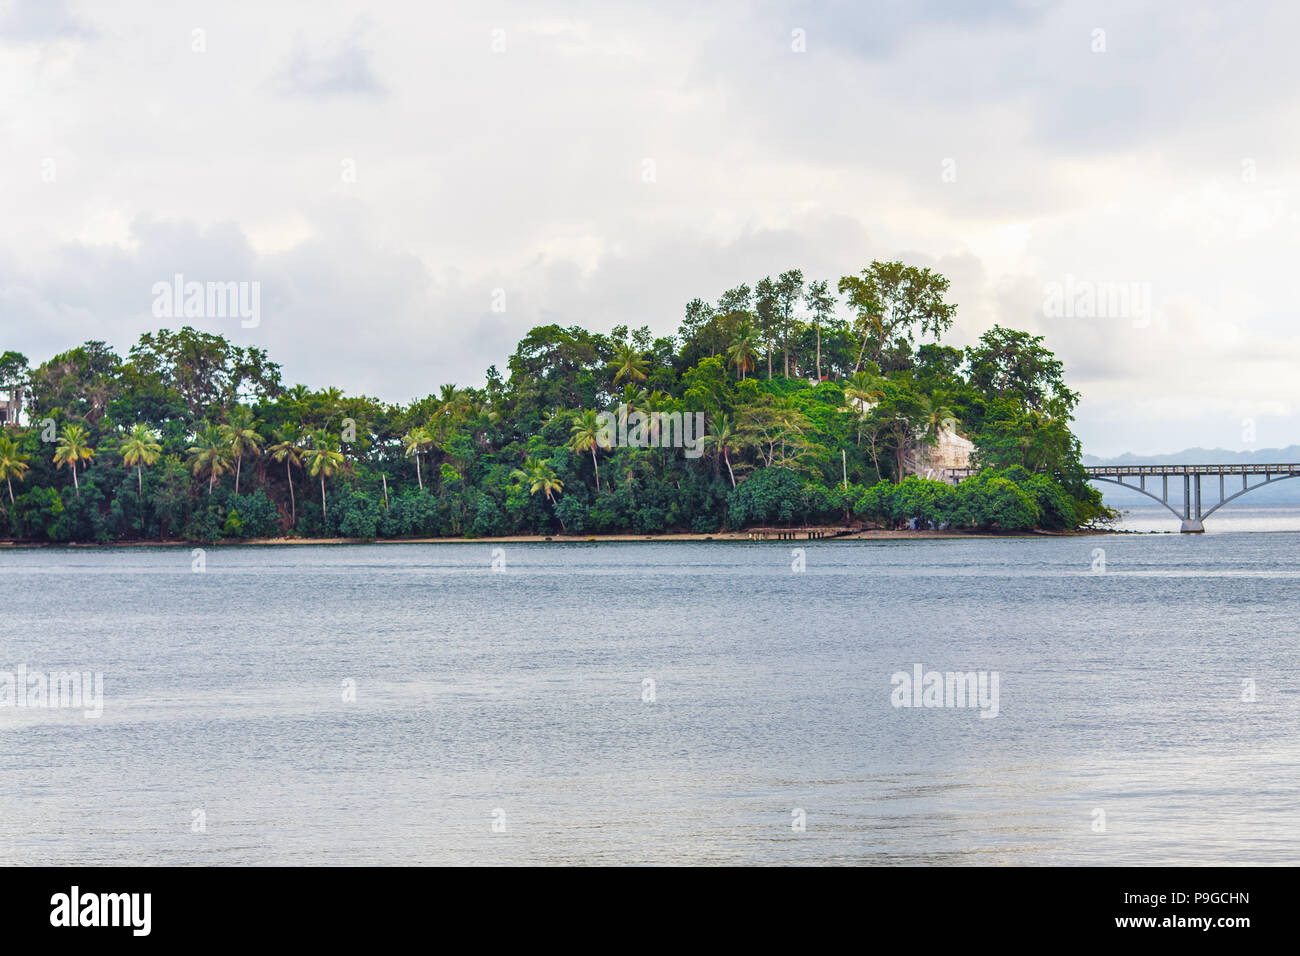 Island with palm trees, sea, cloudy. Samana, Dominican Republic Stock Photo